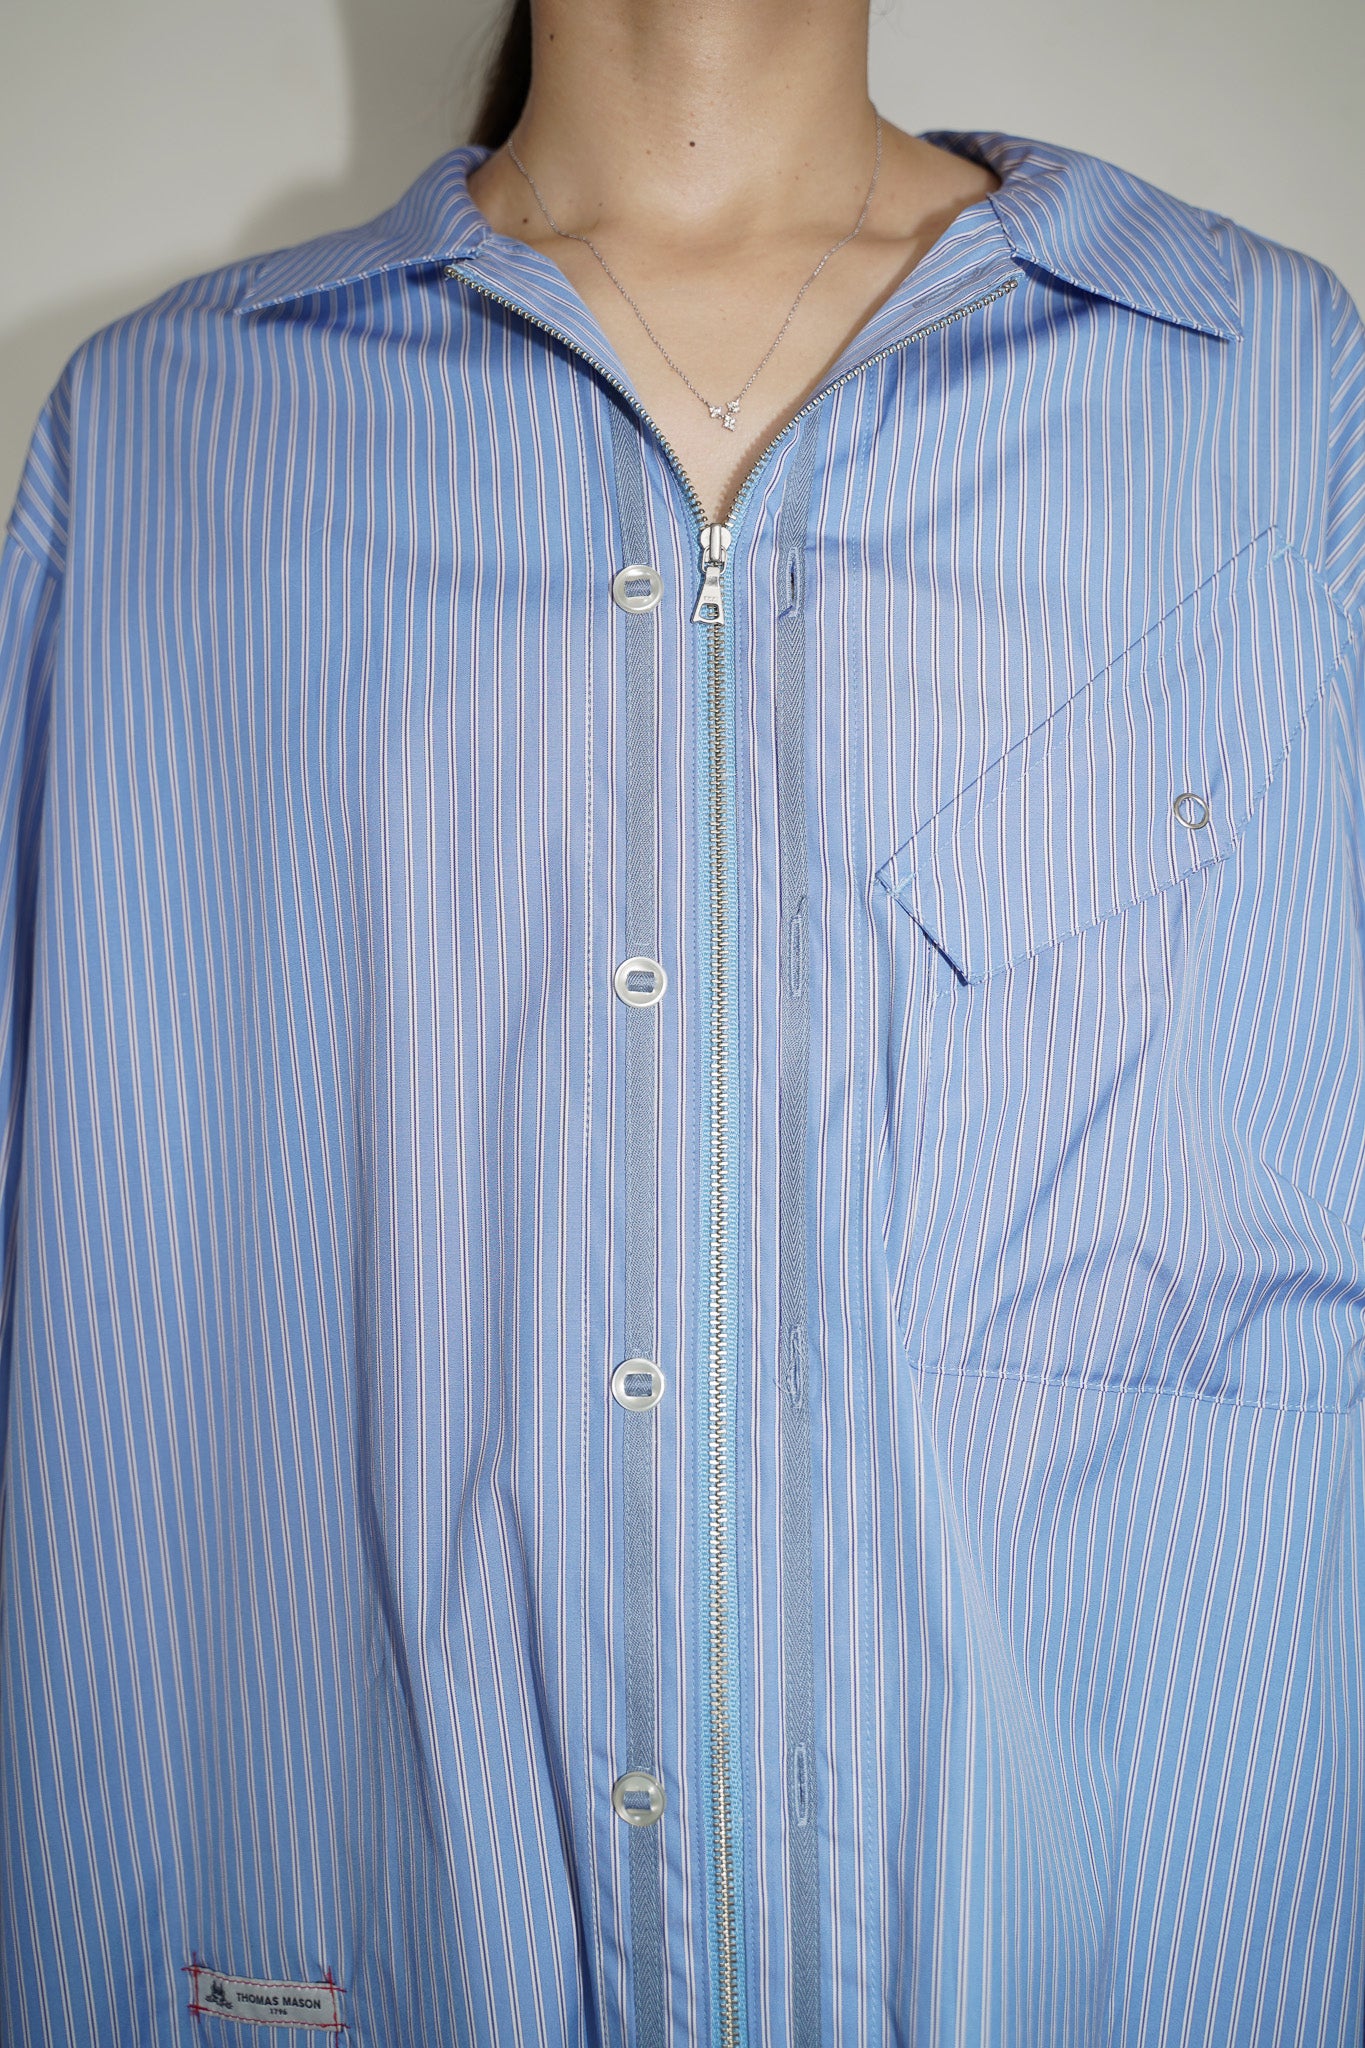 meagratia×THOMAS MASON Stripe zip-up 2way shirt